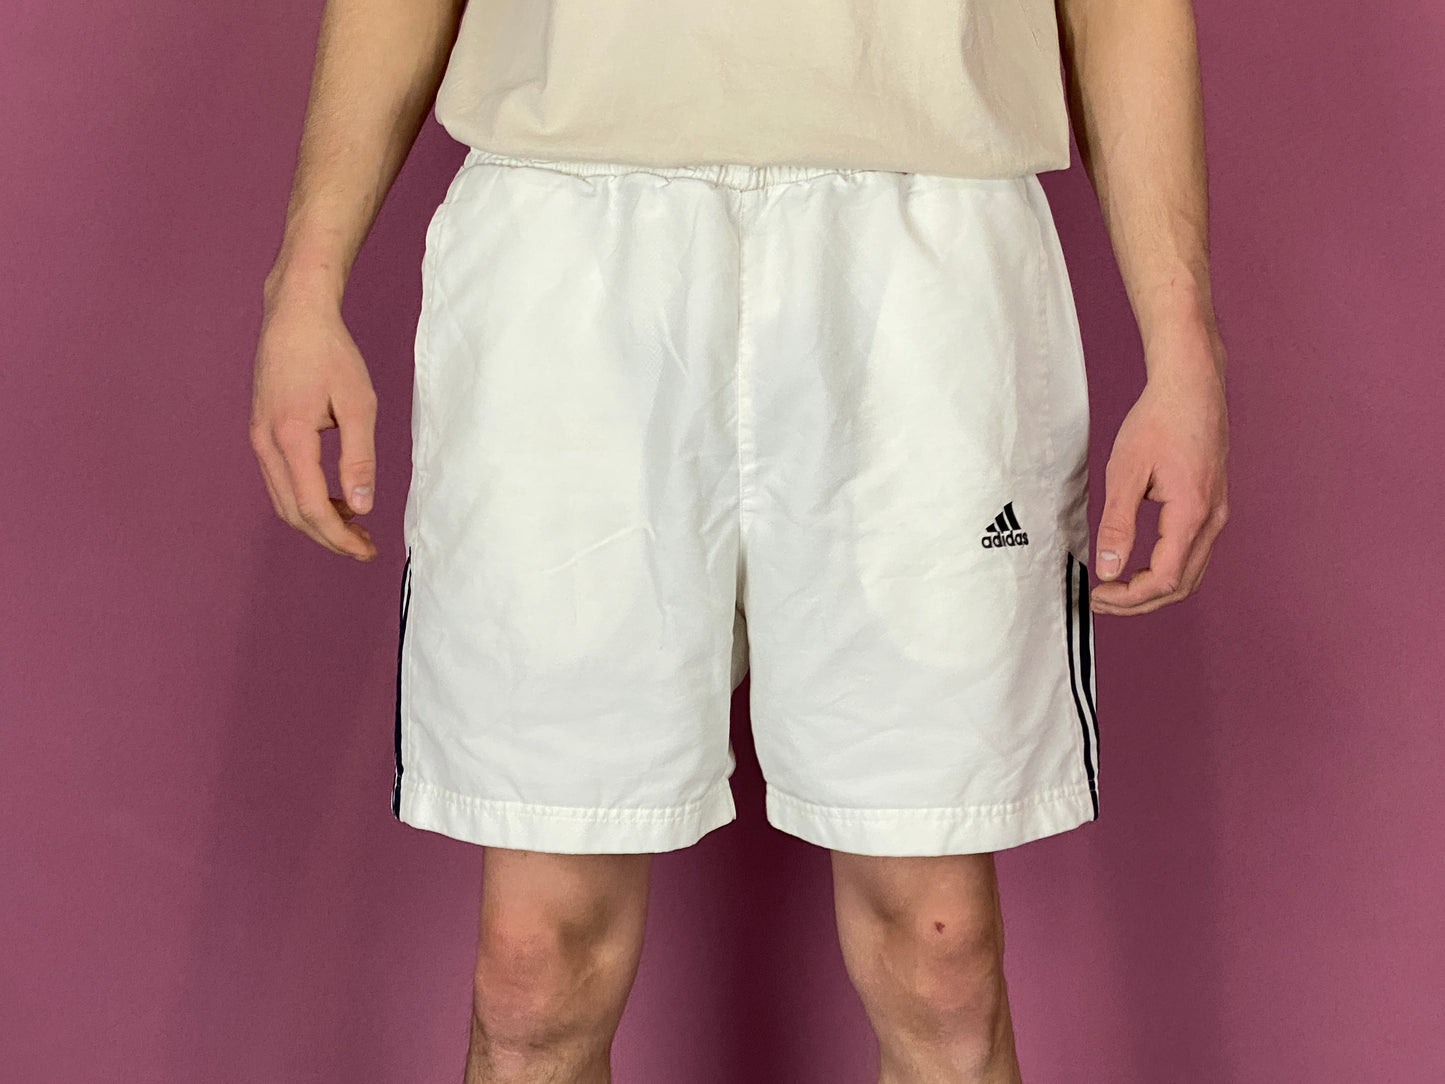 Adidas Vintage Men's Shorts - Large White Polyester